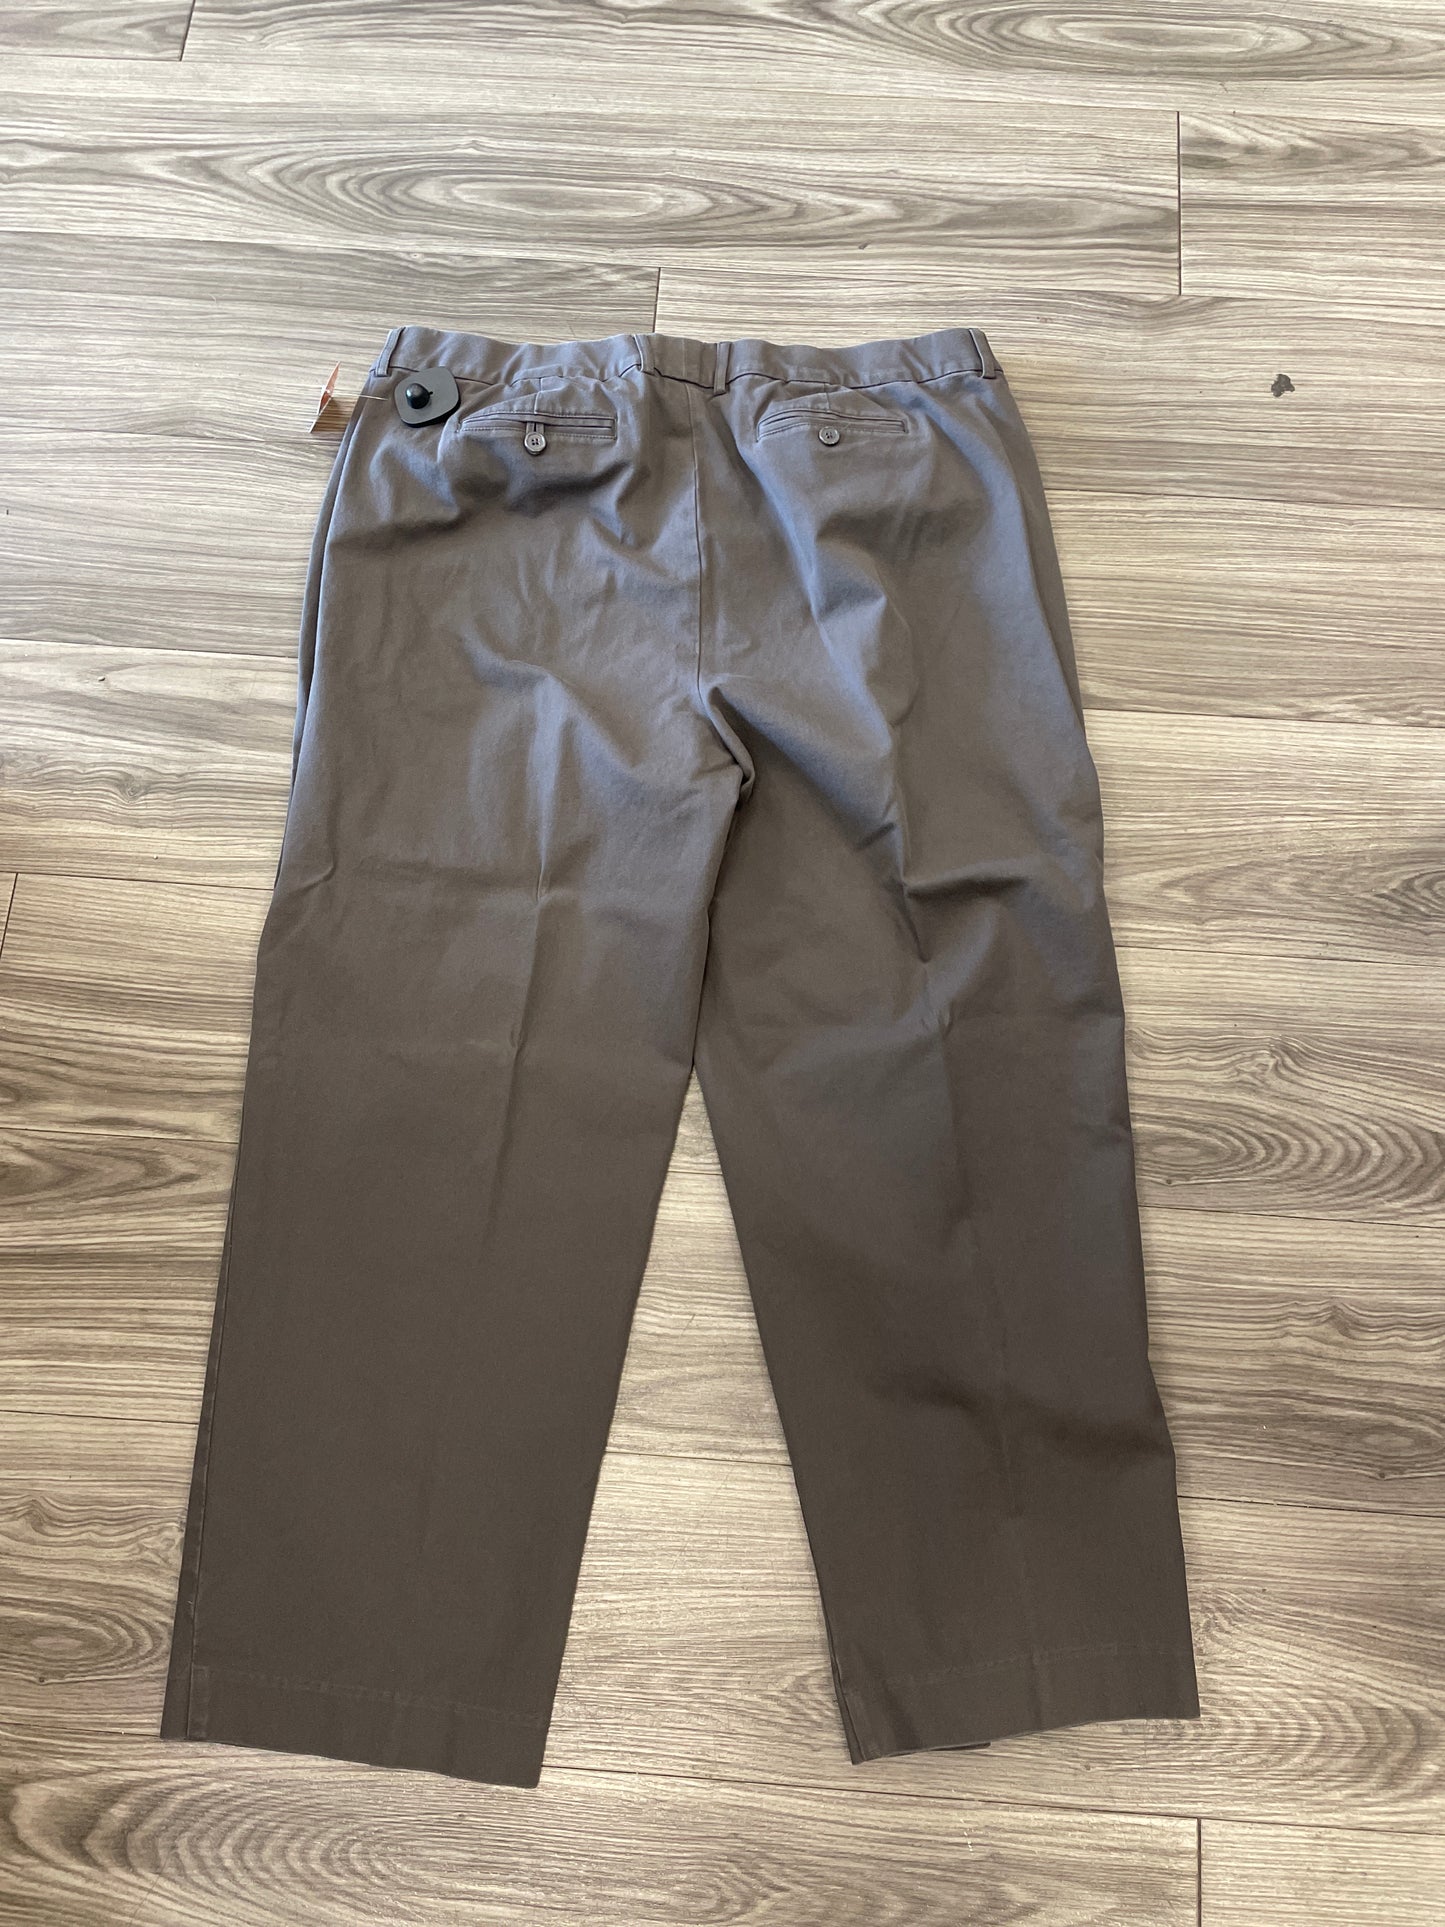 Pants Cargo & Utility By Talbots  Size: 18w